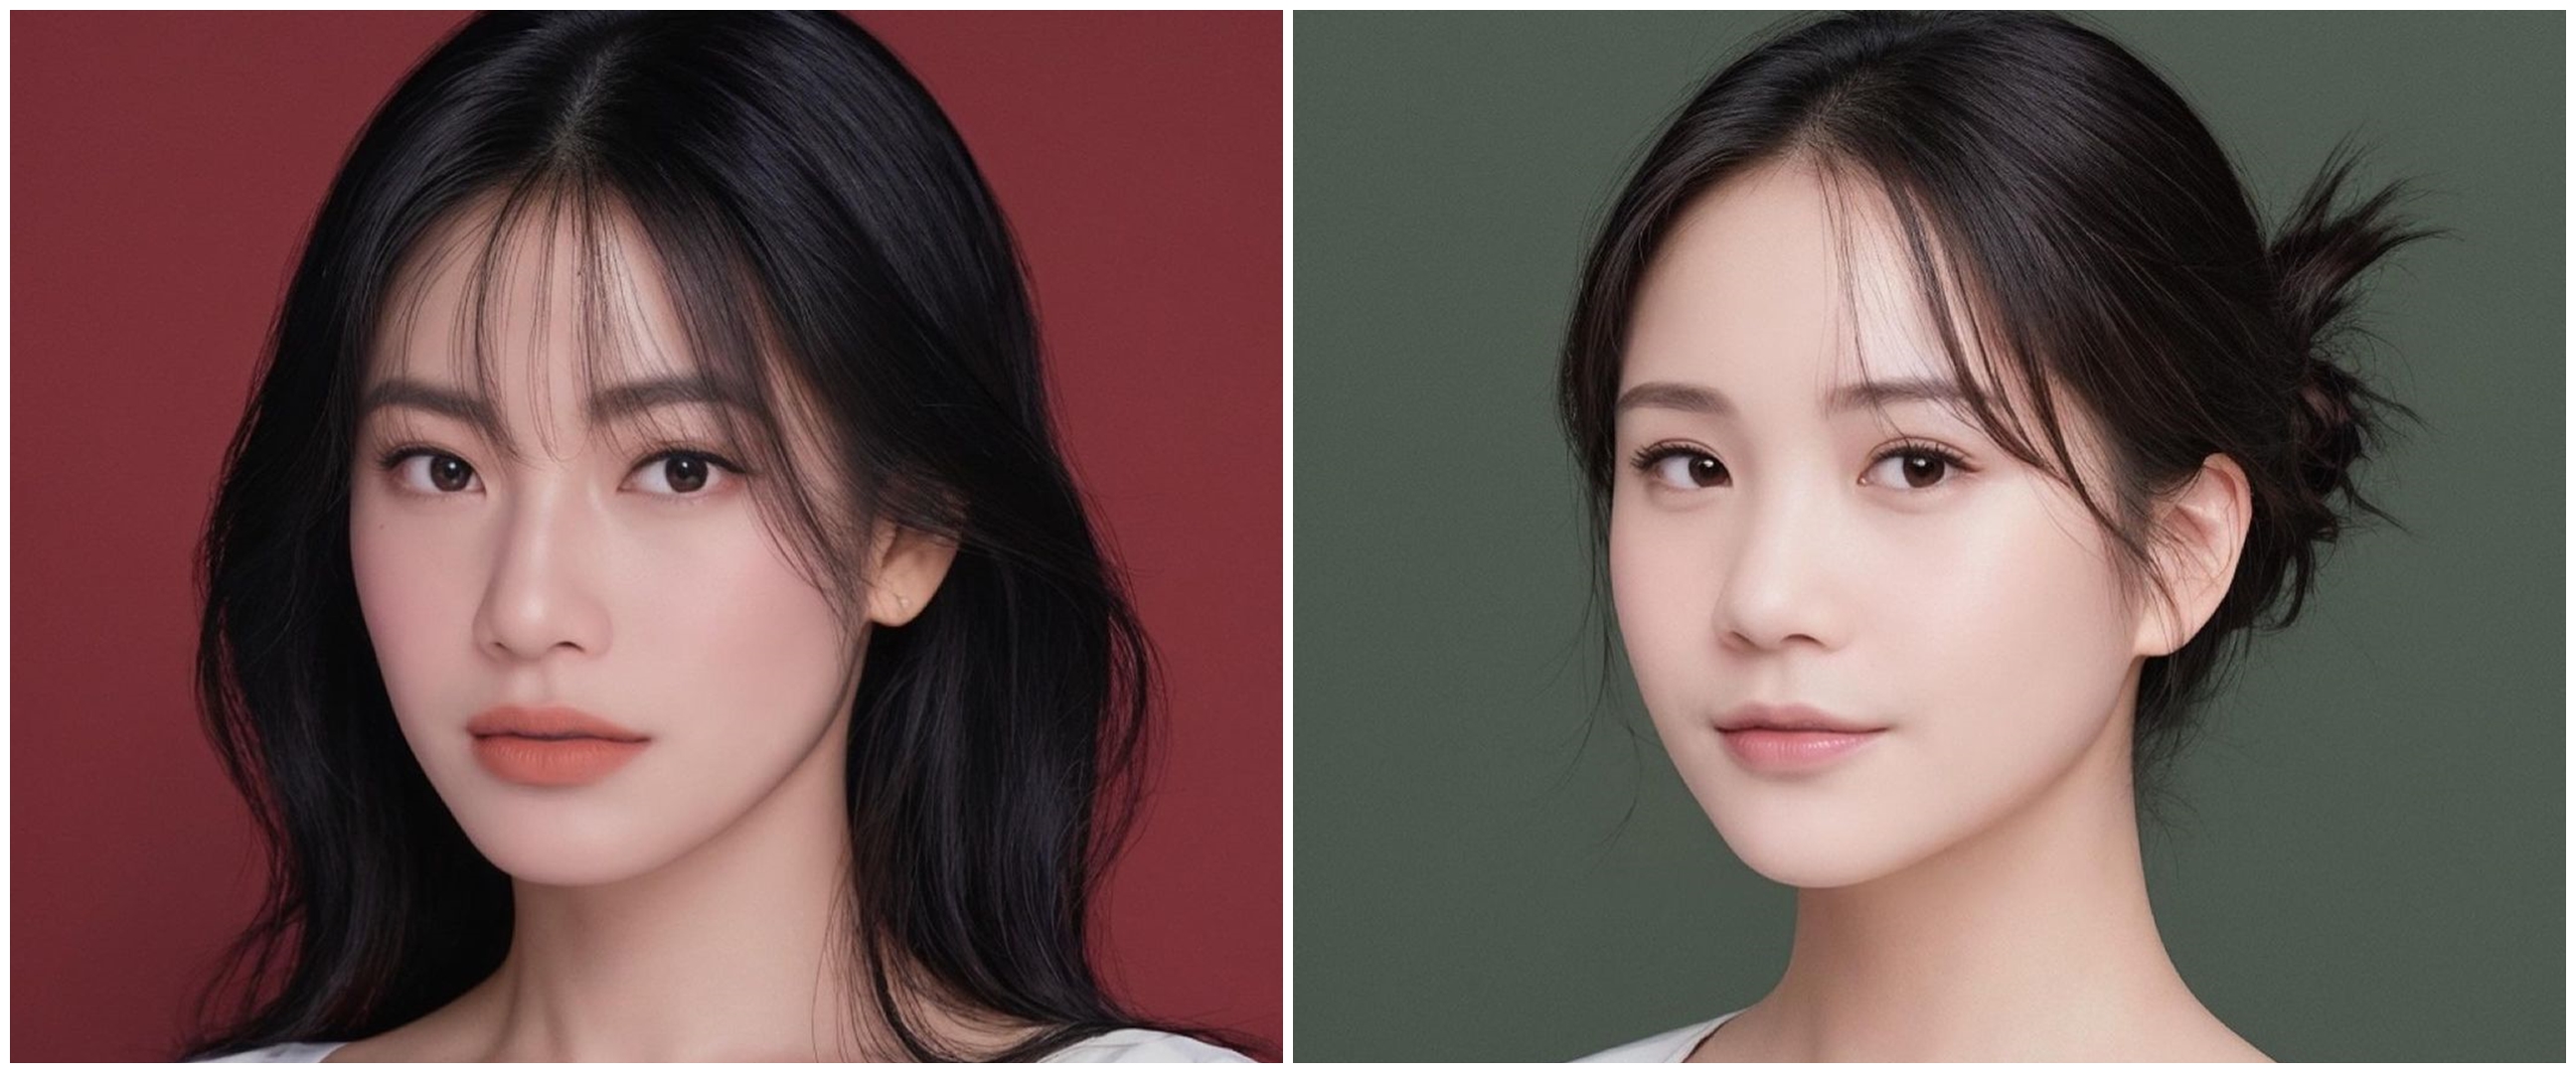 Potret 11 seleb tanah air ikutan tren filter AI Korean look, paras Fuji mirip aktris Kim Tae-ri